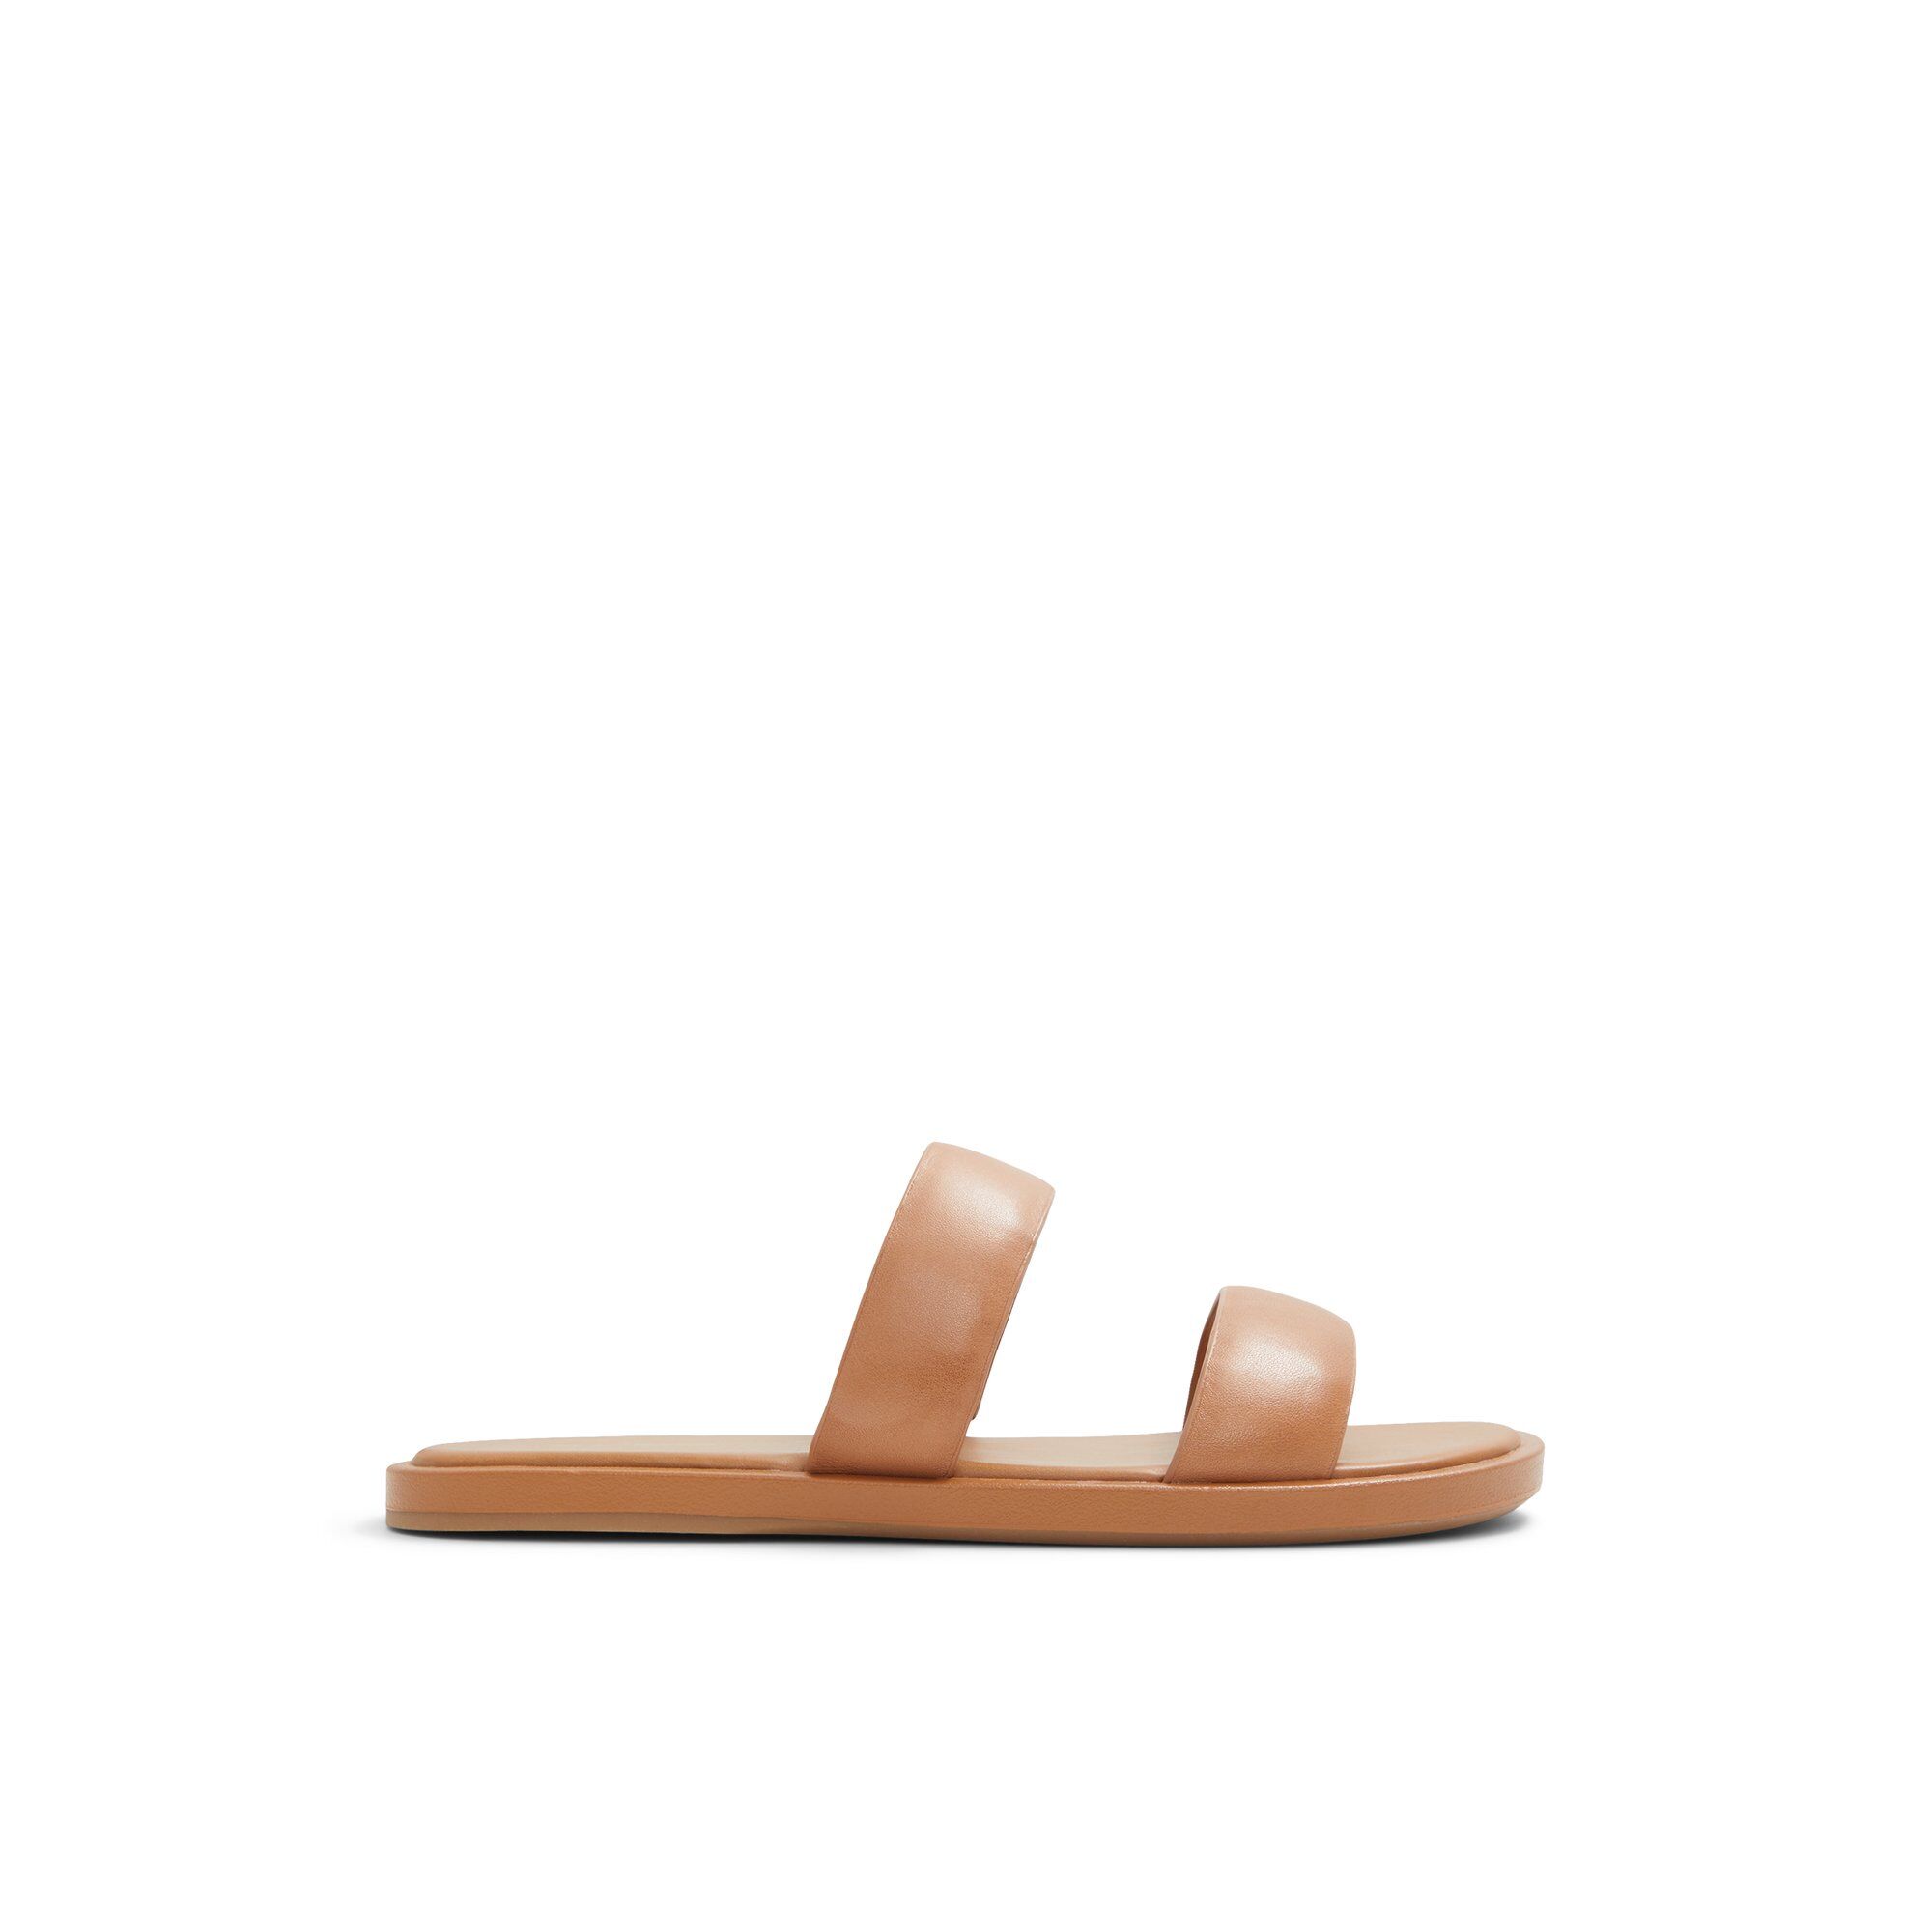 ALDO Krios - Women's Flat Sandals - Beige, Size 10